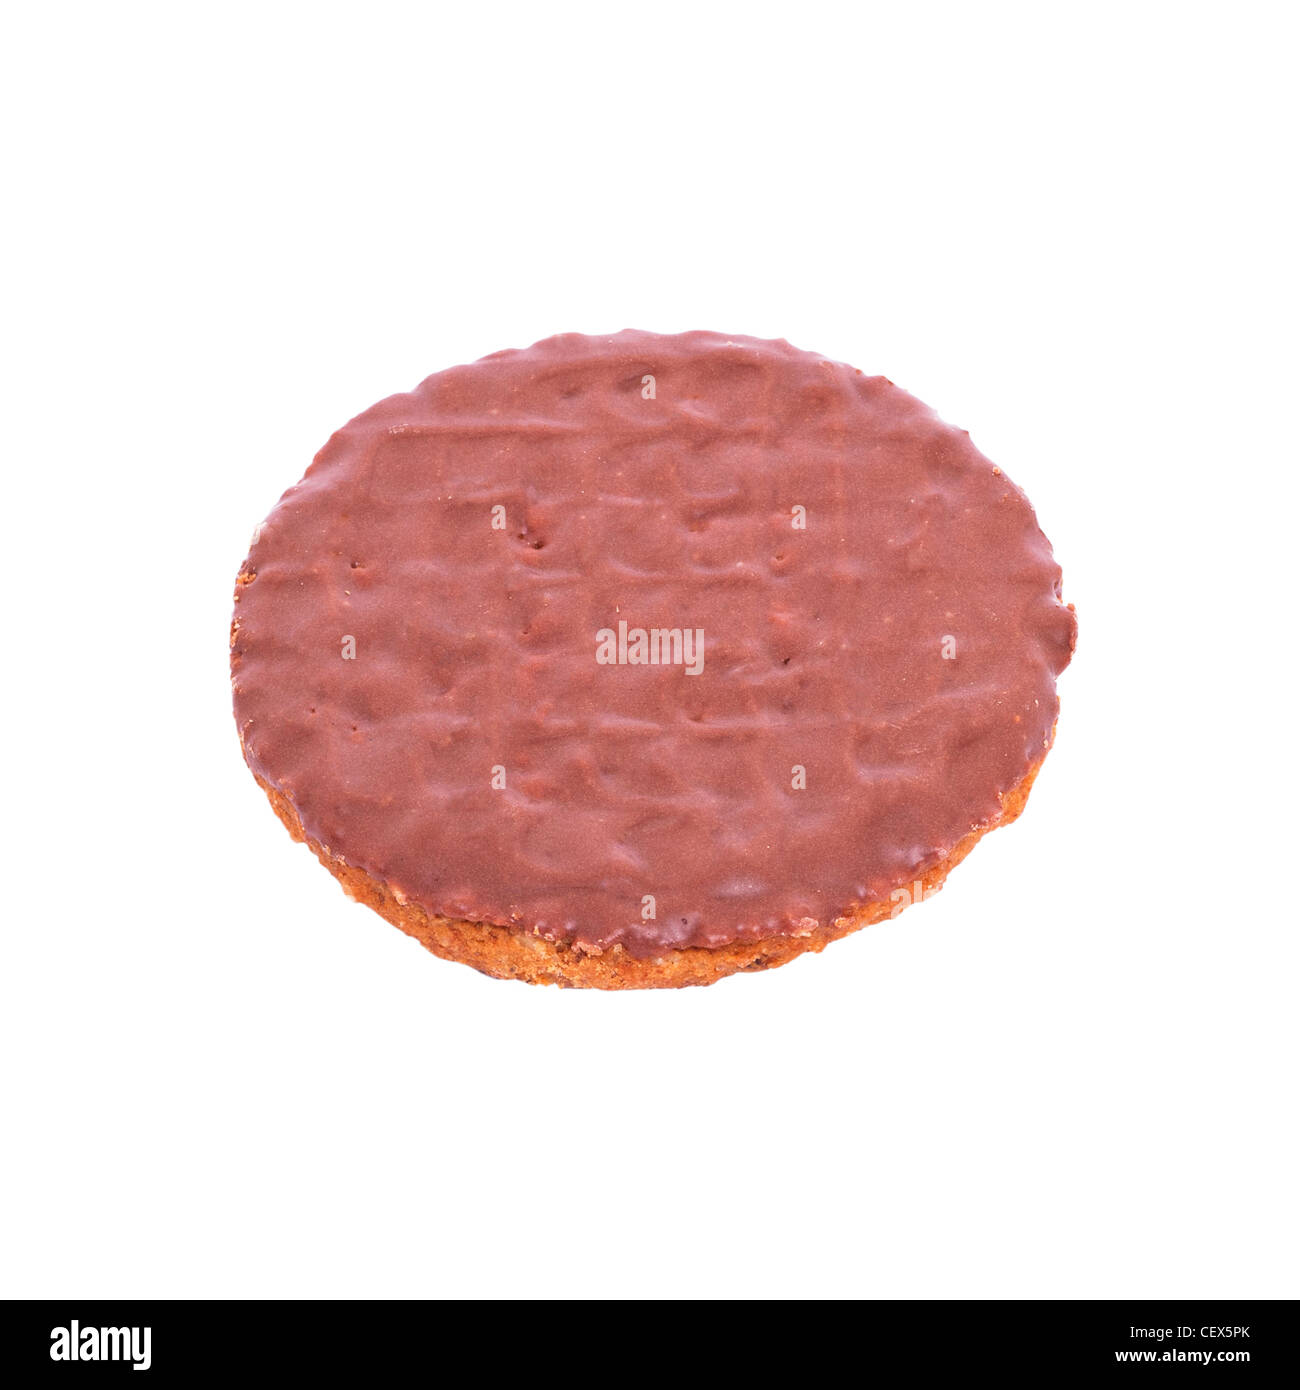 A Mcvitie's milk chocolate Hobnob biscuit on a white background Stock Photo